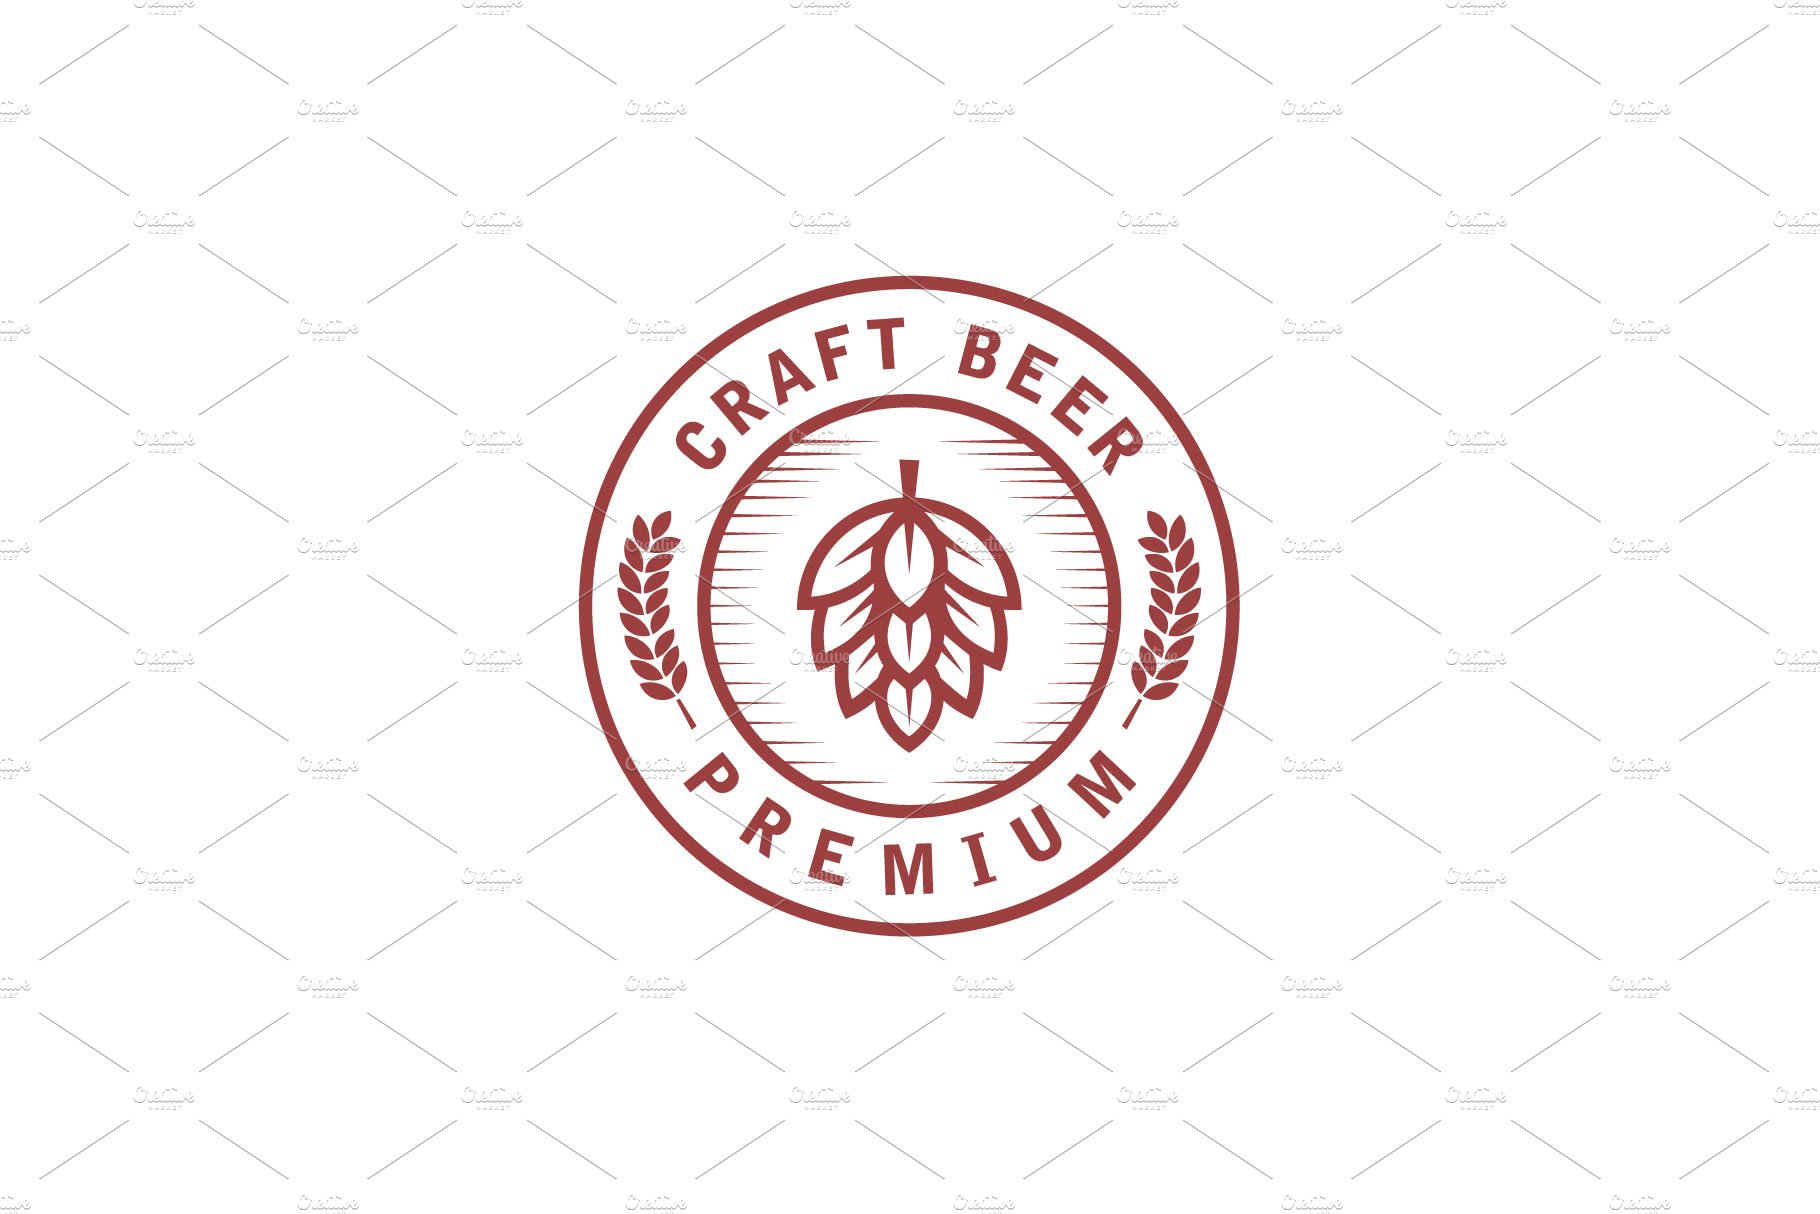 Brewing emblem logo Premium Vector cover image.